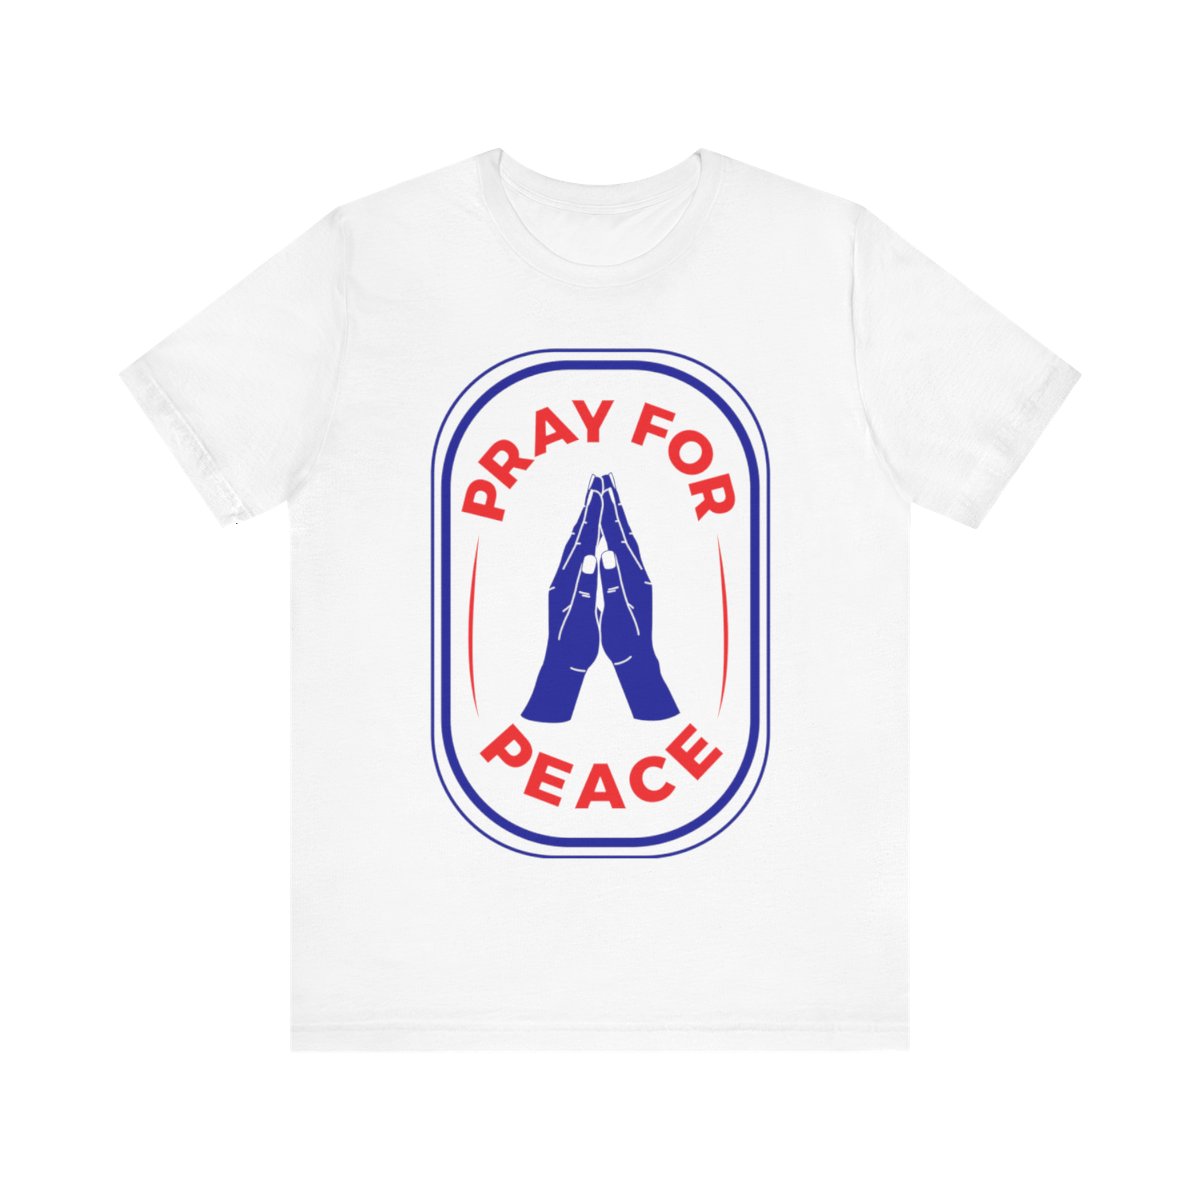 Pray for Peace t-shirt product thumbnail image